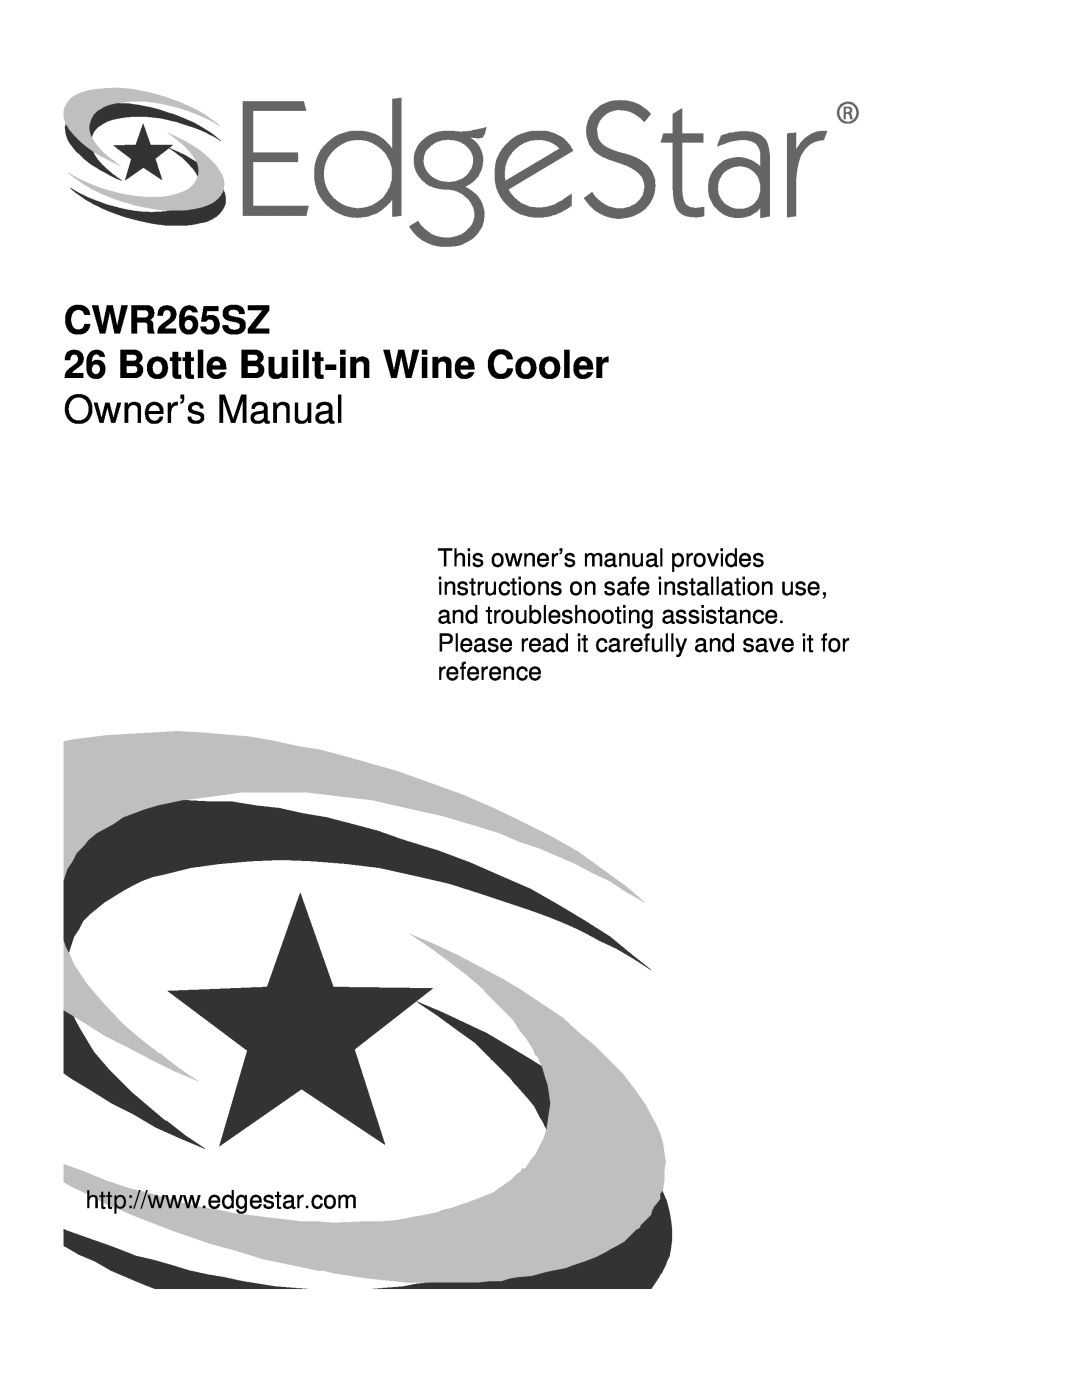 EdgeStar owner manual CWR265SZ 26 Bottle Built-in Wine Cooler 